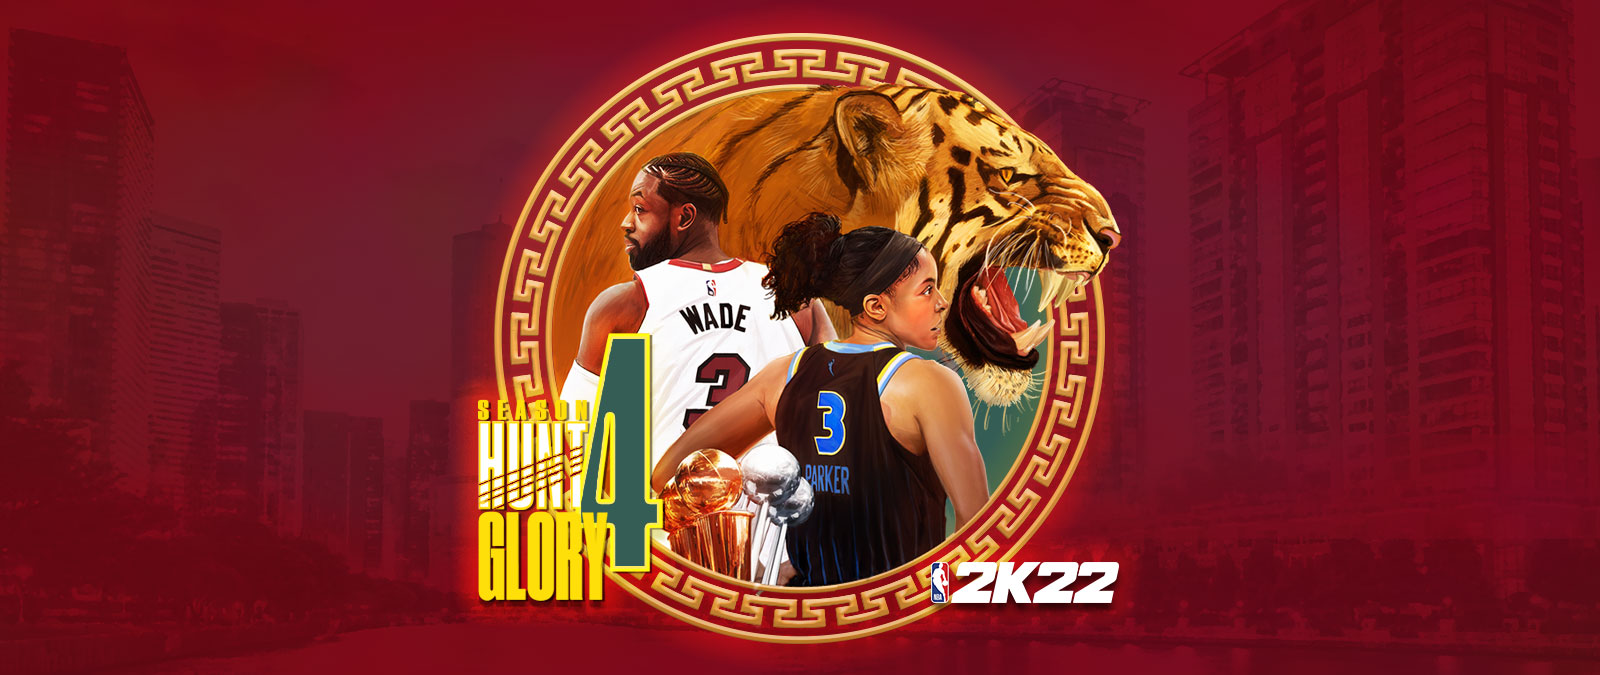 NBA 2K22, 시즌 4: 영광의 길, 붉은 색조의 도시 경관 위에 으르렁거리는 호랑이와 등을 돌리고 있는 드웨인 웨이드, 캔디스 파커가 그려진 원형 그래픽이 있습니다. 